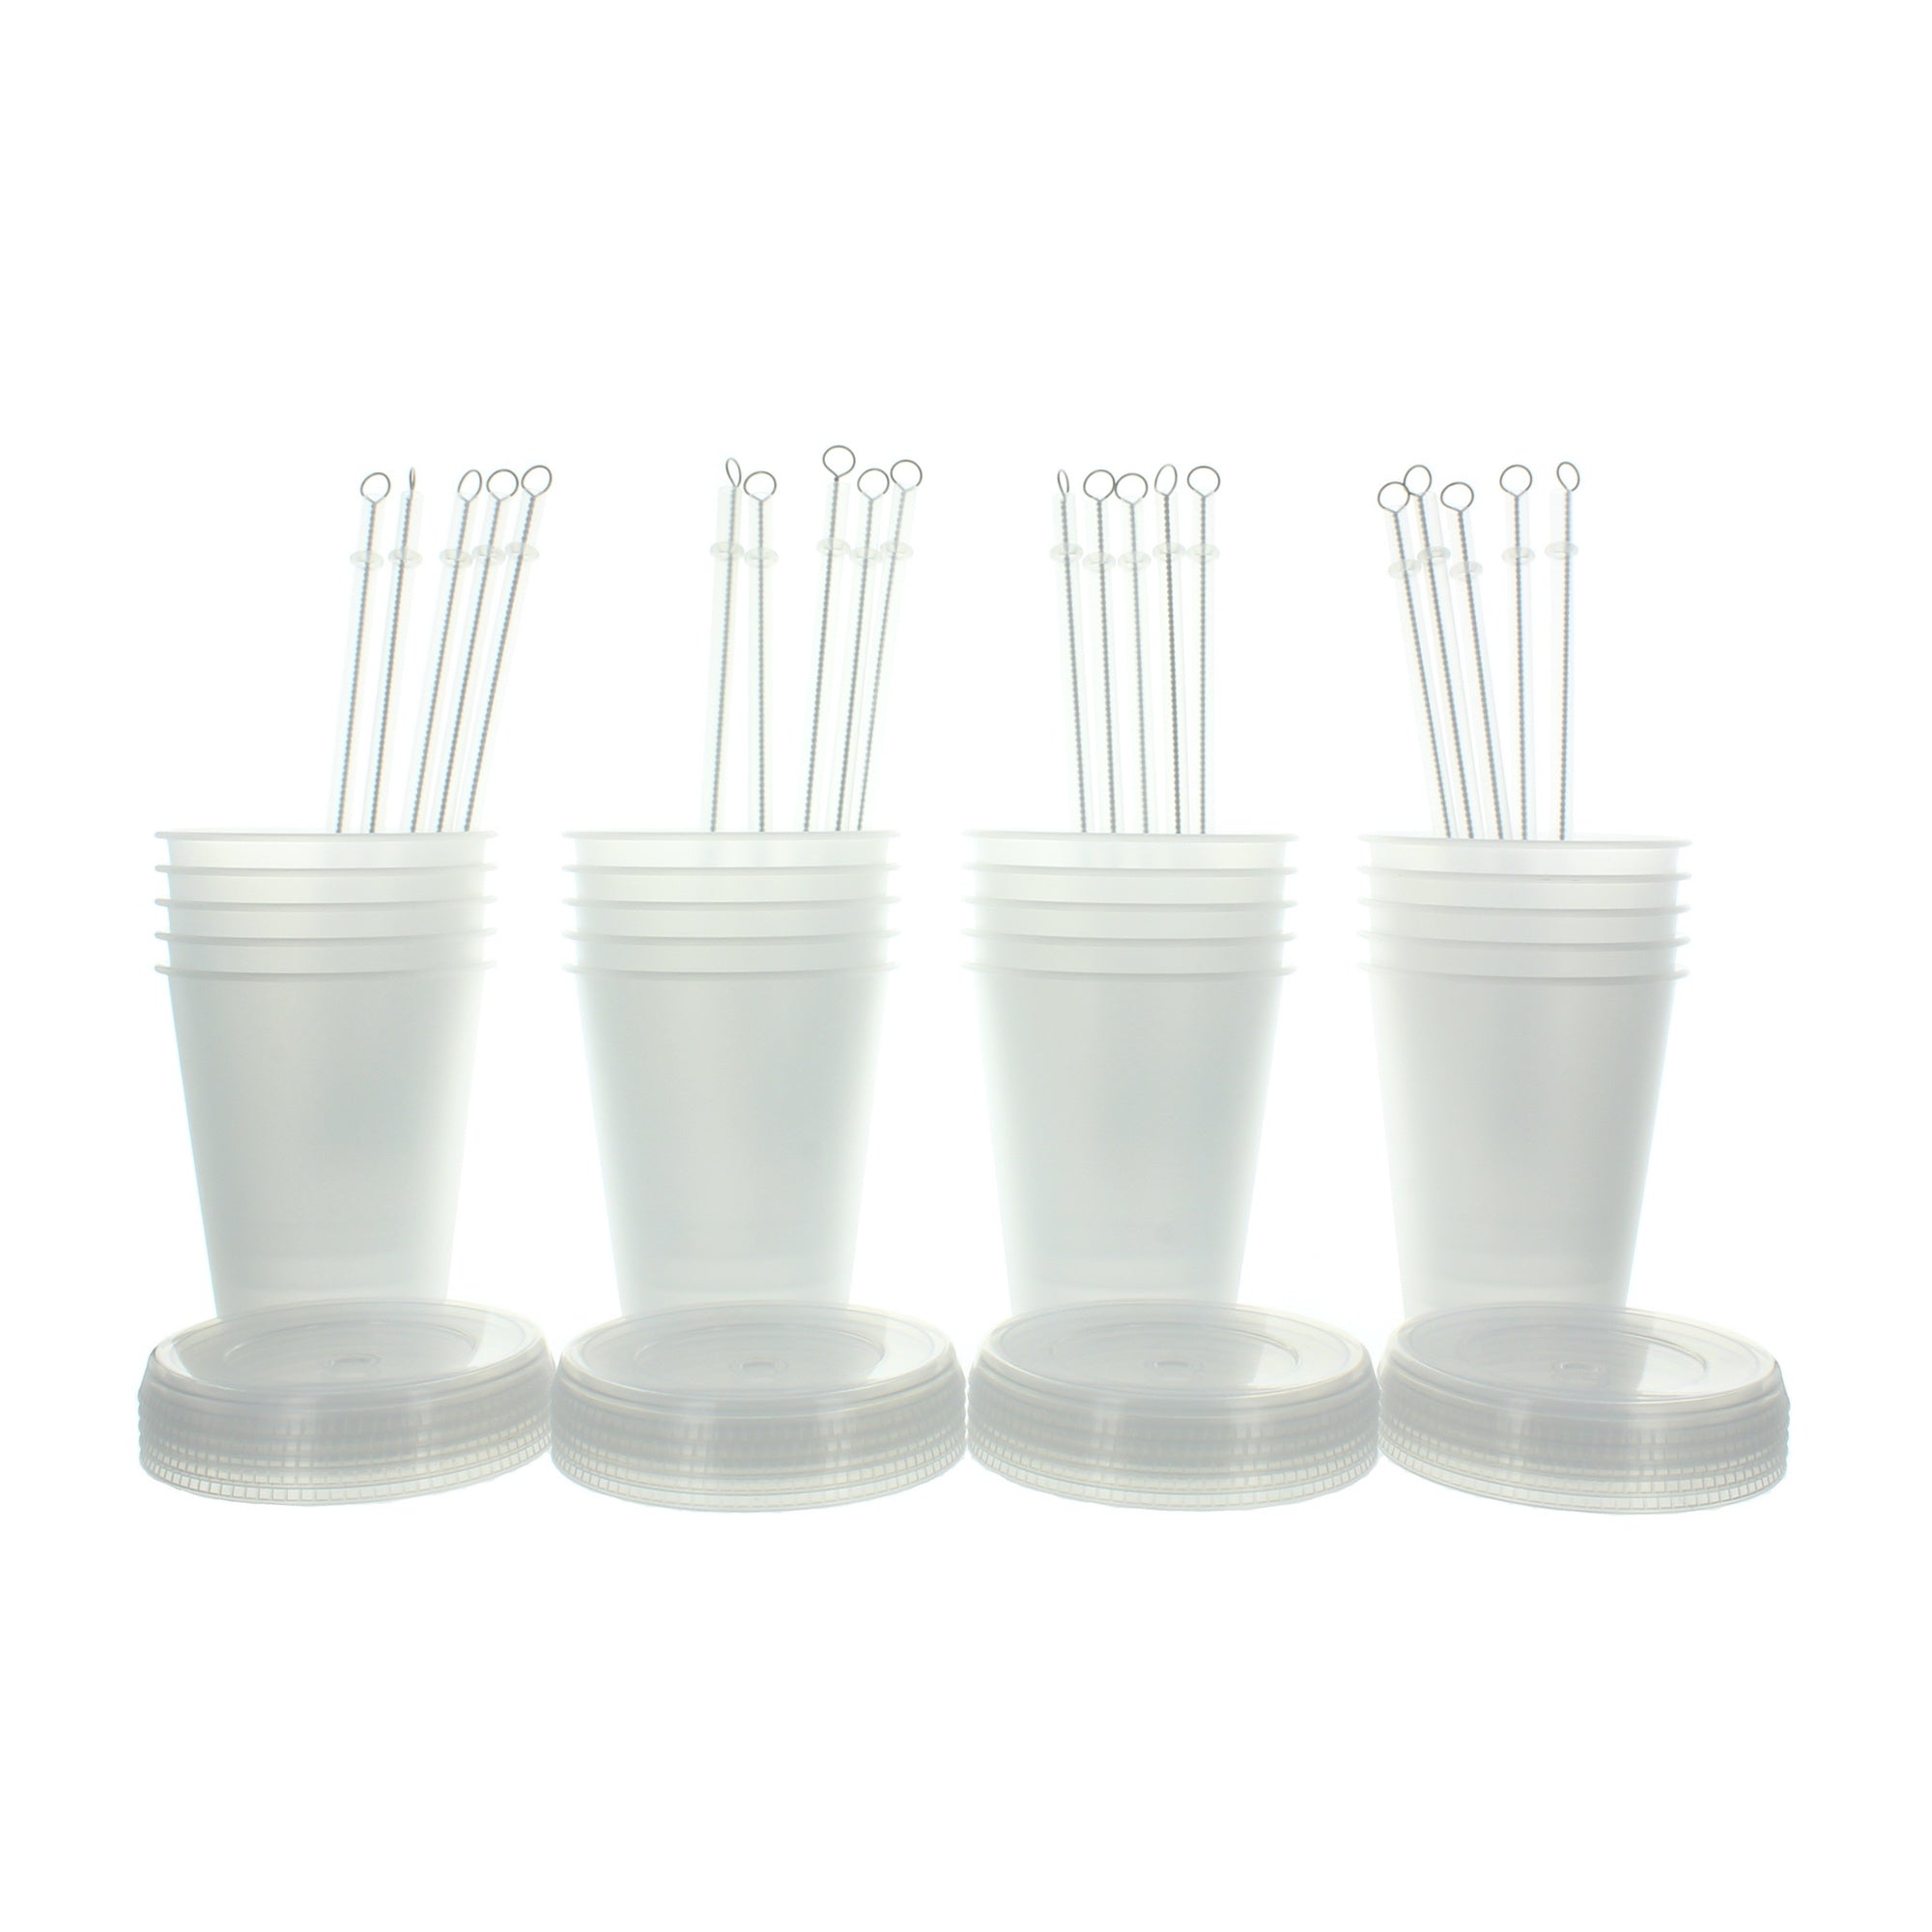 Reusable Cups Lids Straws, Transparent Reusable Cup Lid